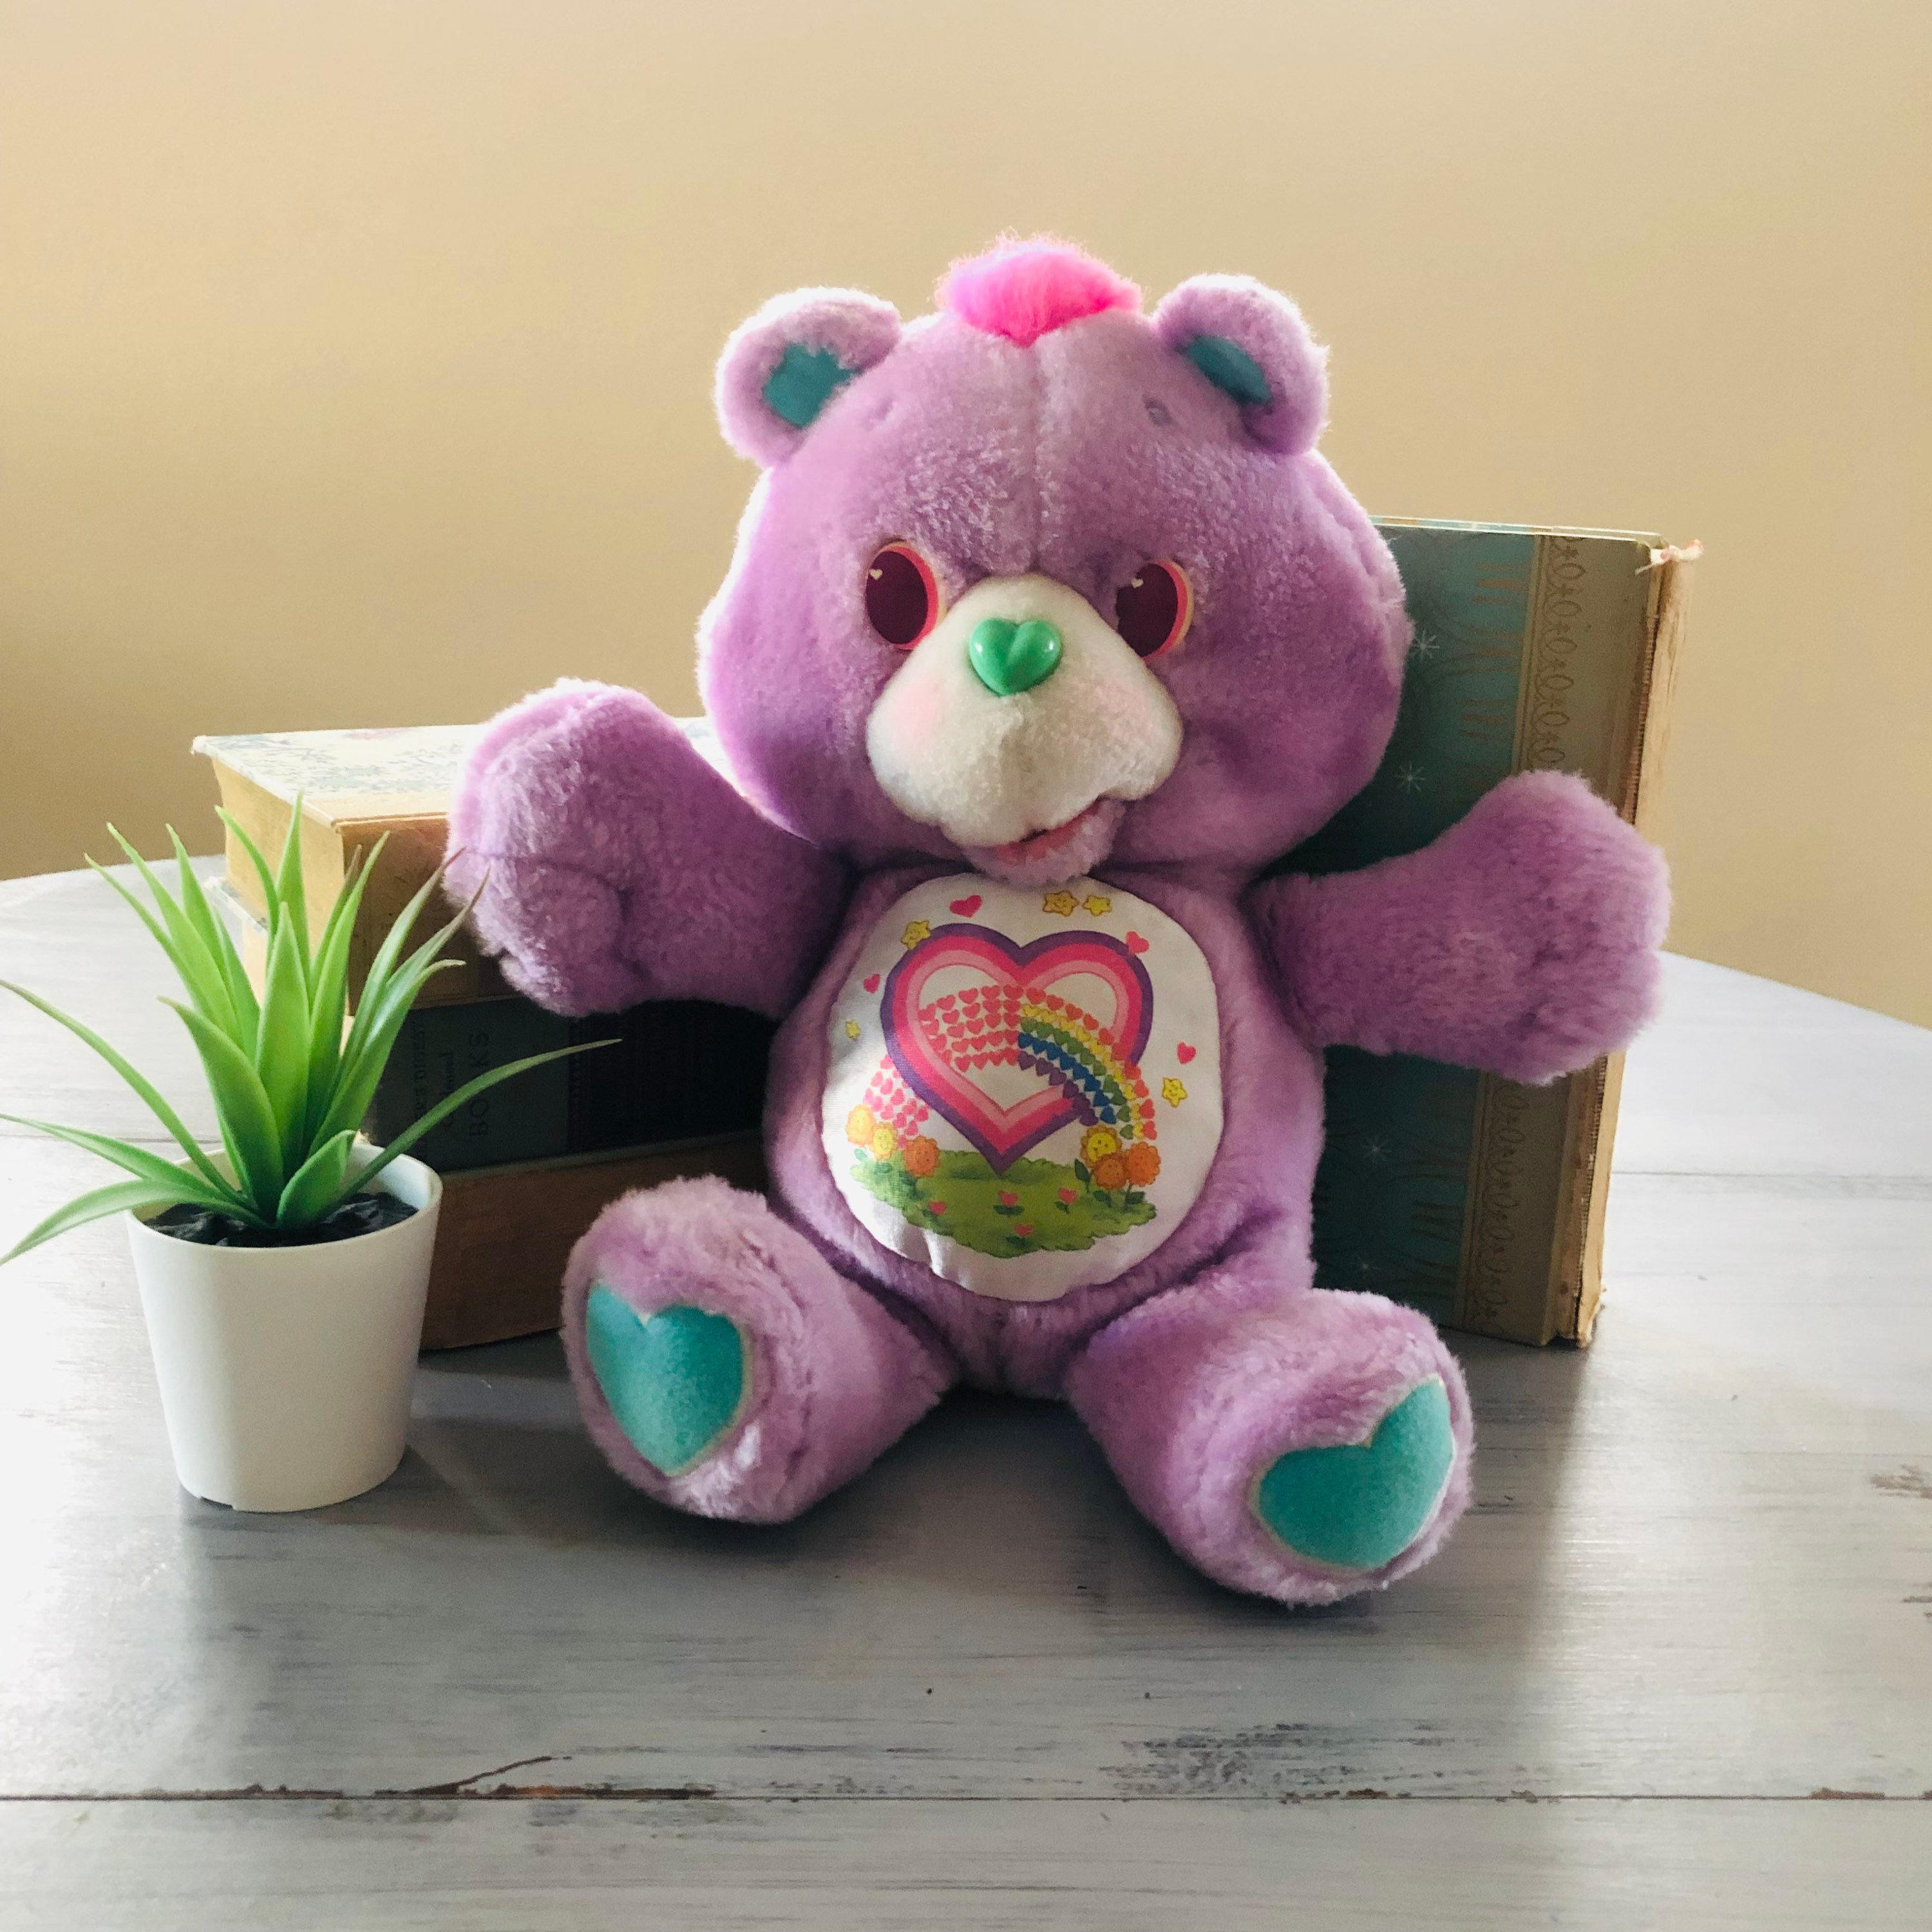 Share Bear Care Bears Costume Infant Size